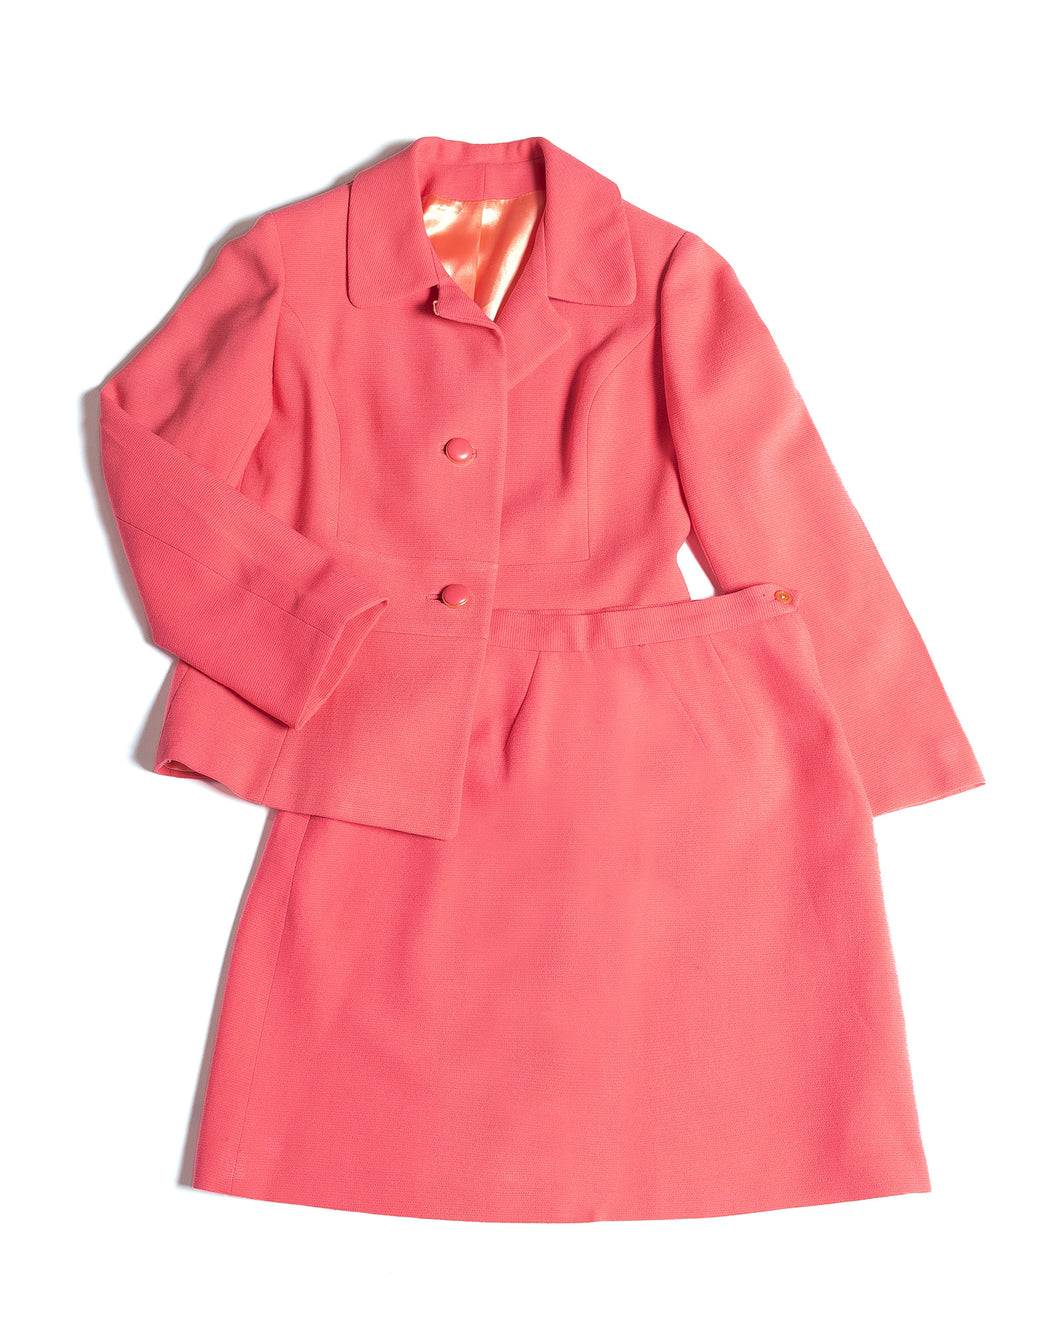 1960s Bubblegum Pink Tailored Skirt Suit